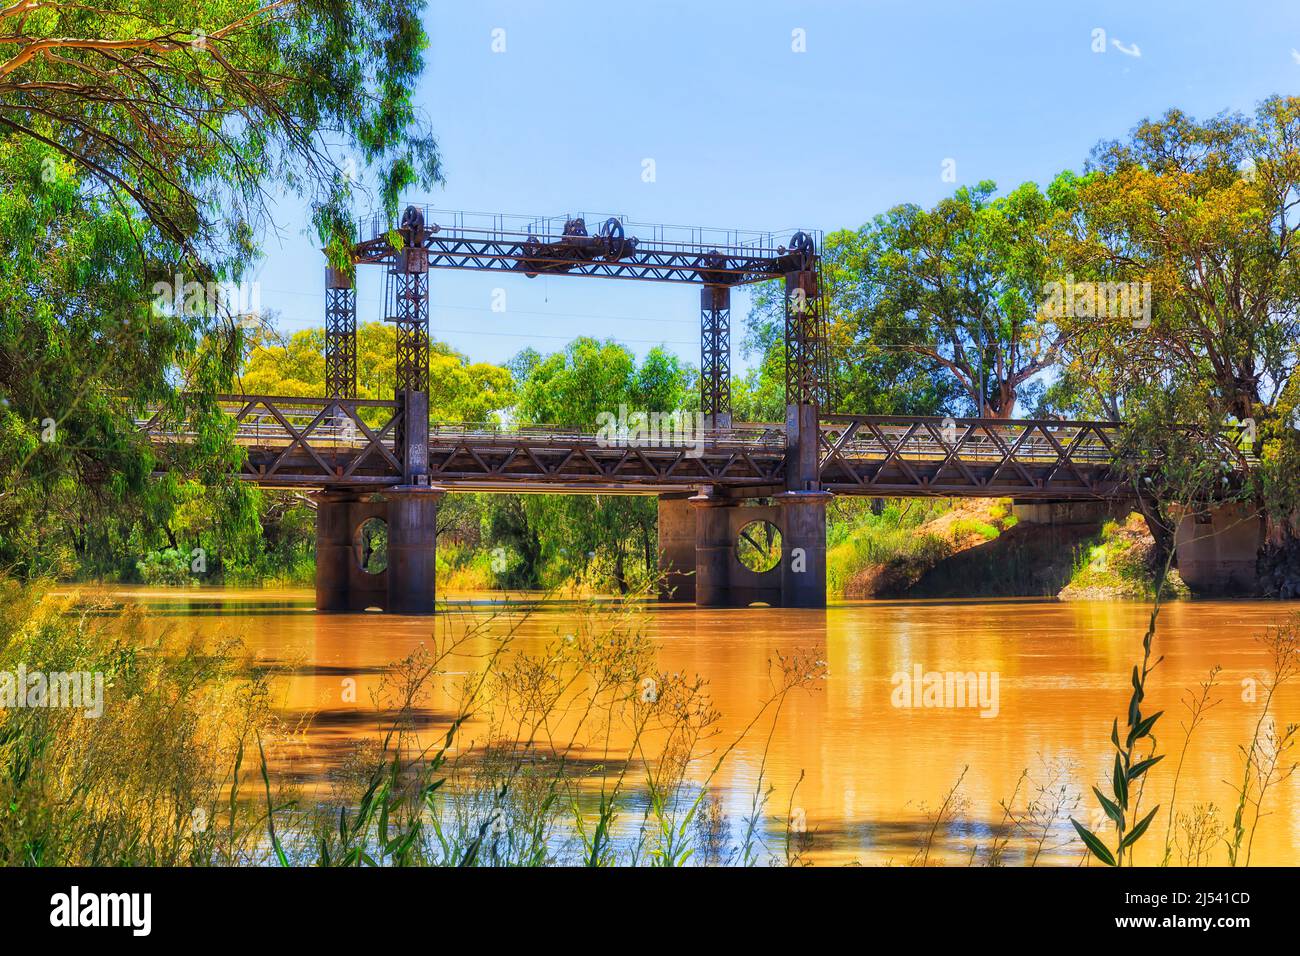 Grüner Bäckerpark in Wilcannia Stadt am Ufer des Darling River - australisches Outback mit Spit Bridge of Barrier Highway. Stockfoto